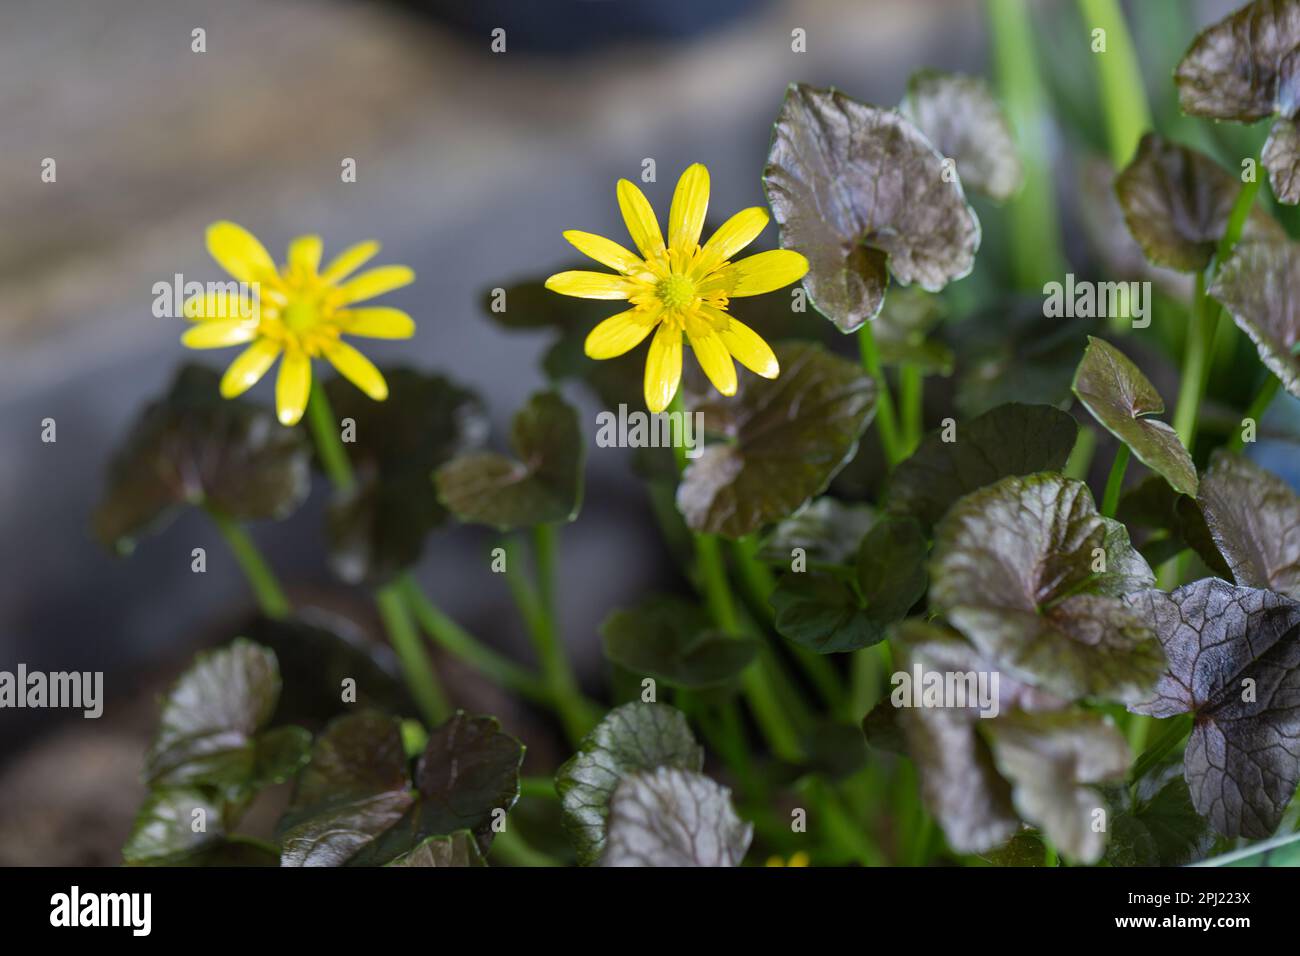 Celandina minore, Ranunculus ficaria, 'Hussy Brazen' Foto Stock